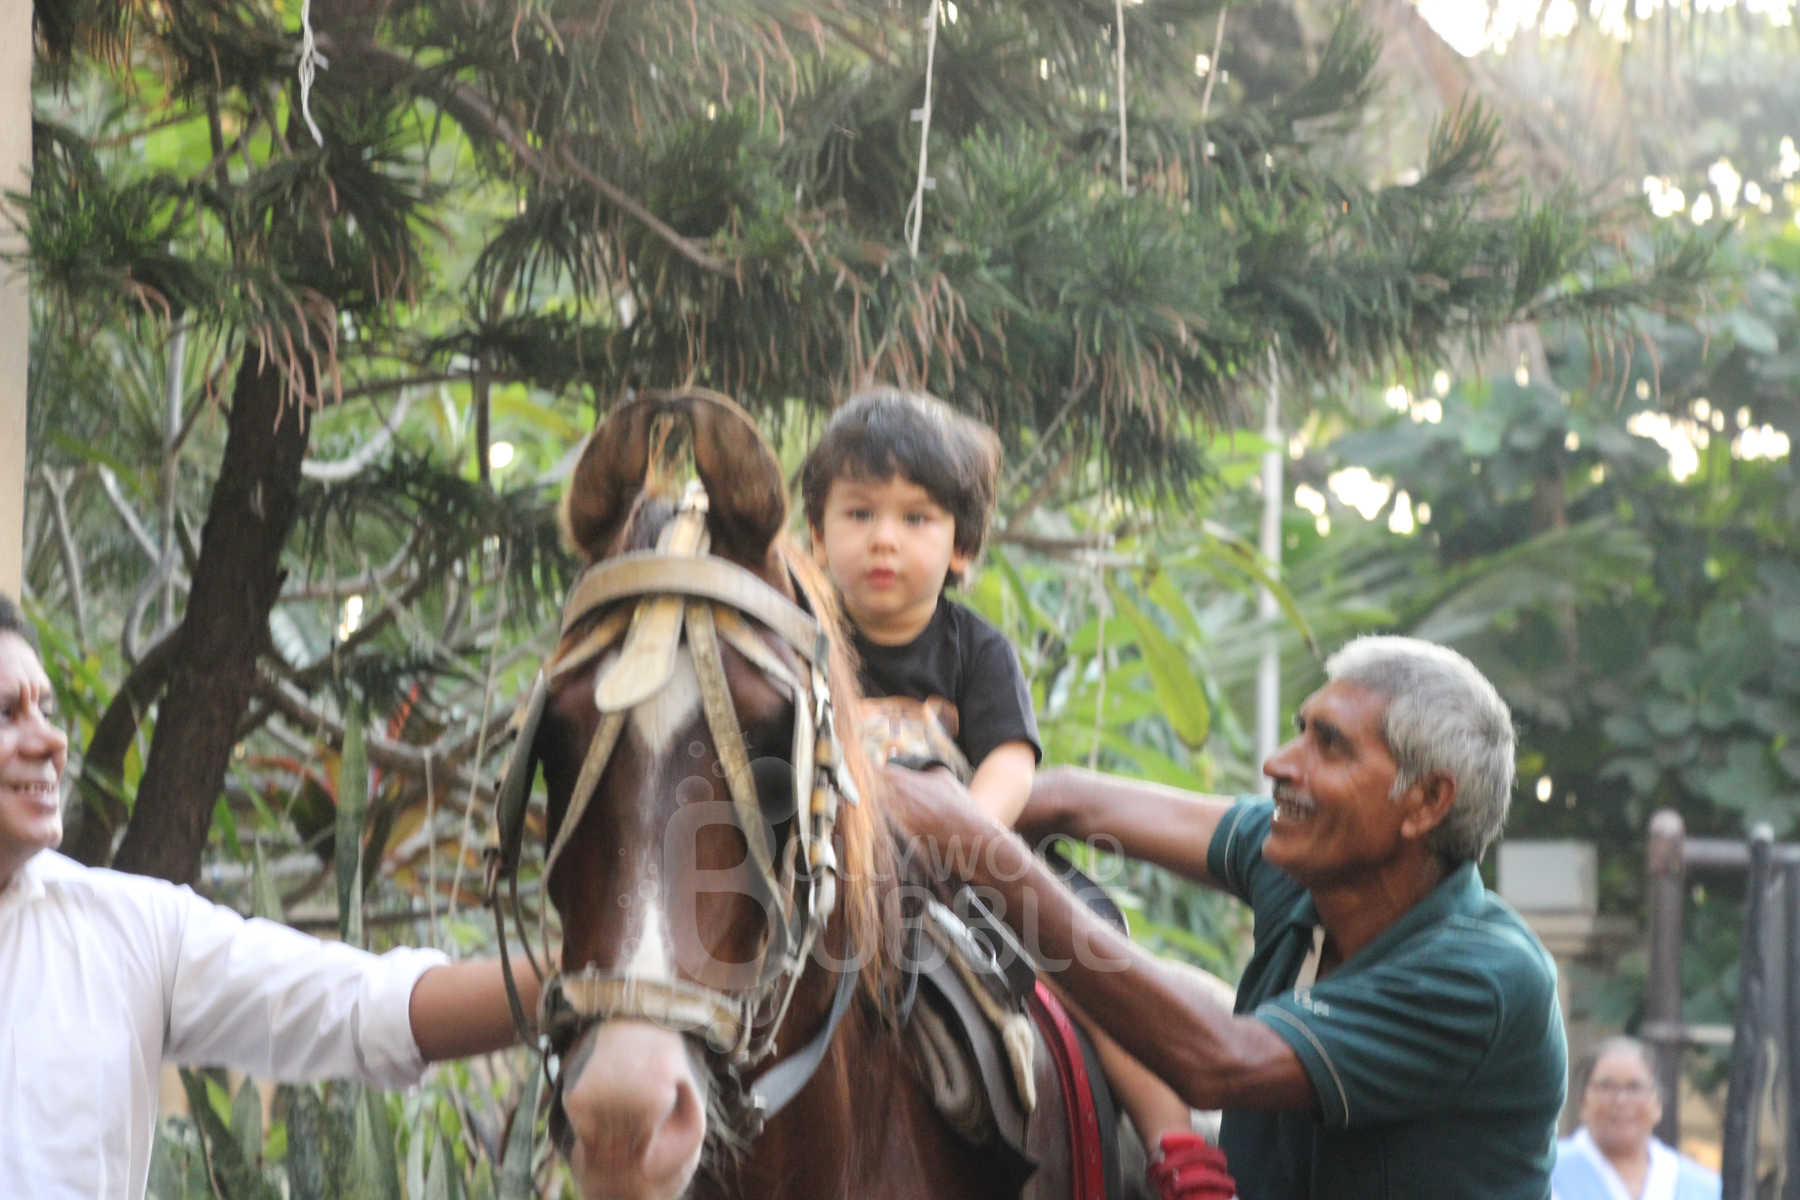 taimur ali khan horse riding pictures november 11